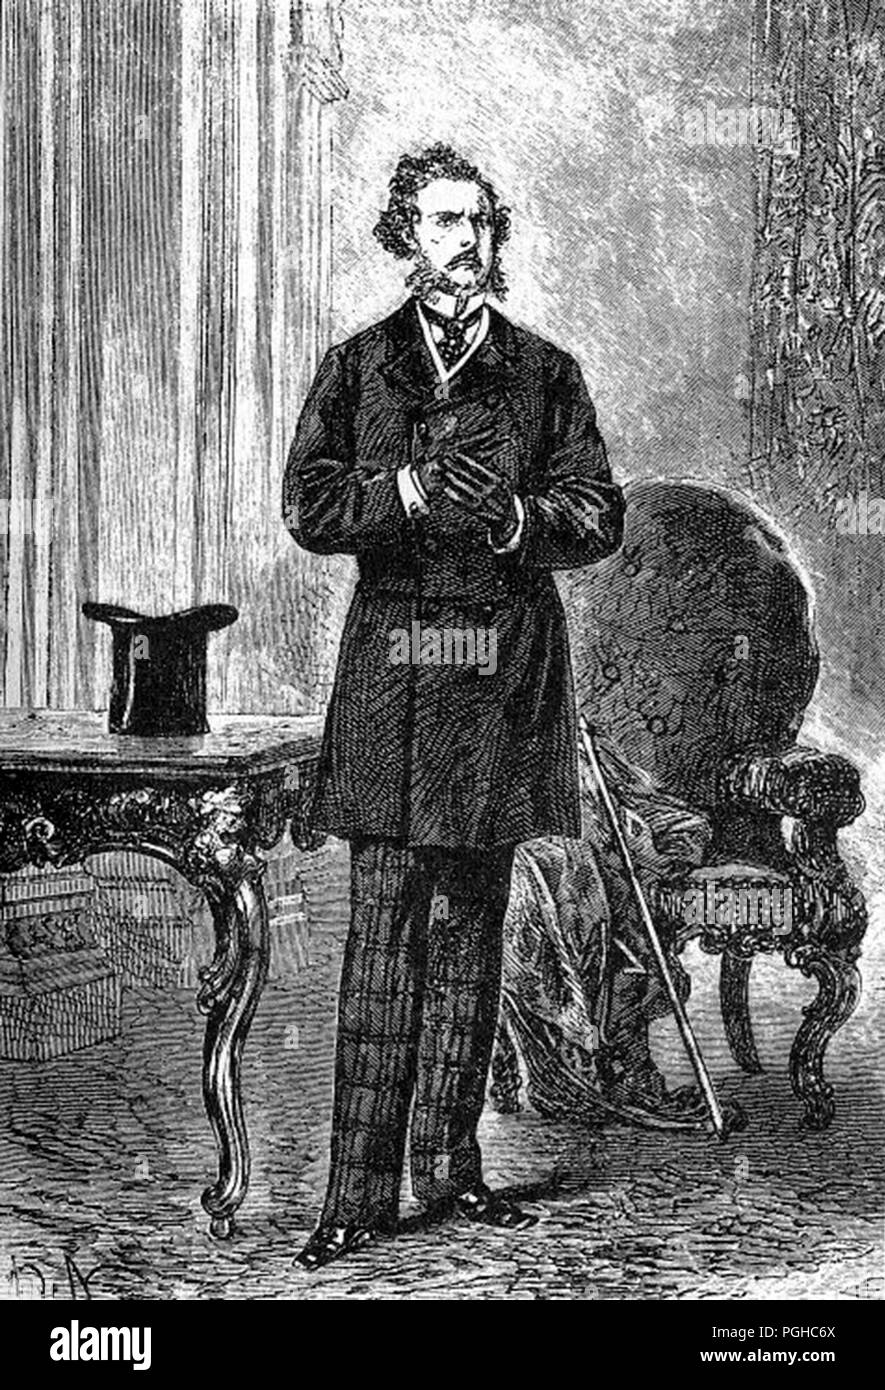 Phileas Fogg by Alphonse de Neuville & Léon Benett, Phileas Fogg is the protagonist in the 1873 Jules Verne novel Around the World in Eighty Days. Stock Photo